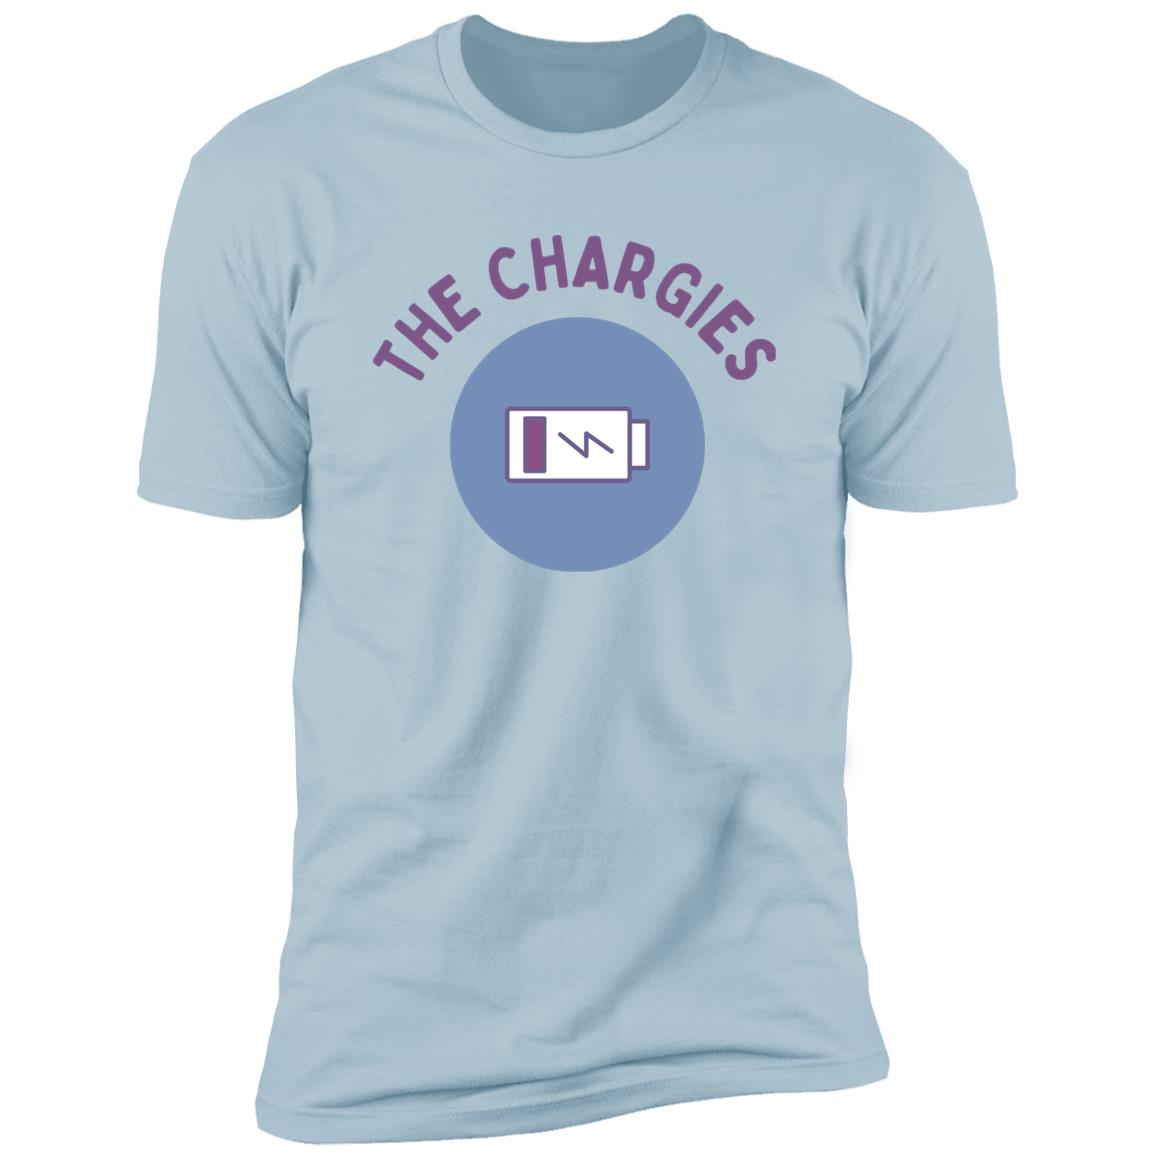 The Chargies T-Shirt